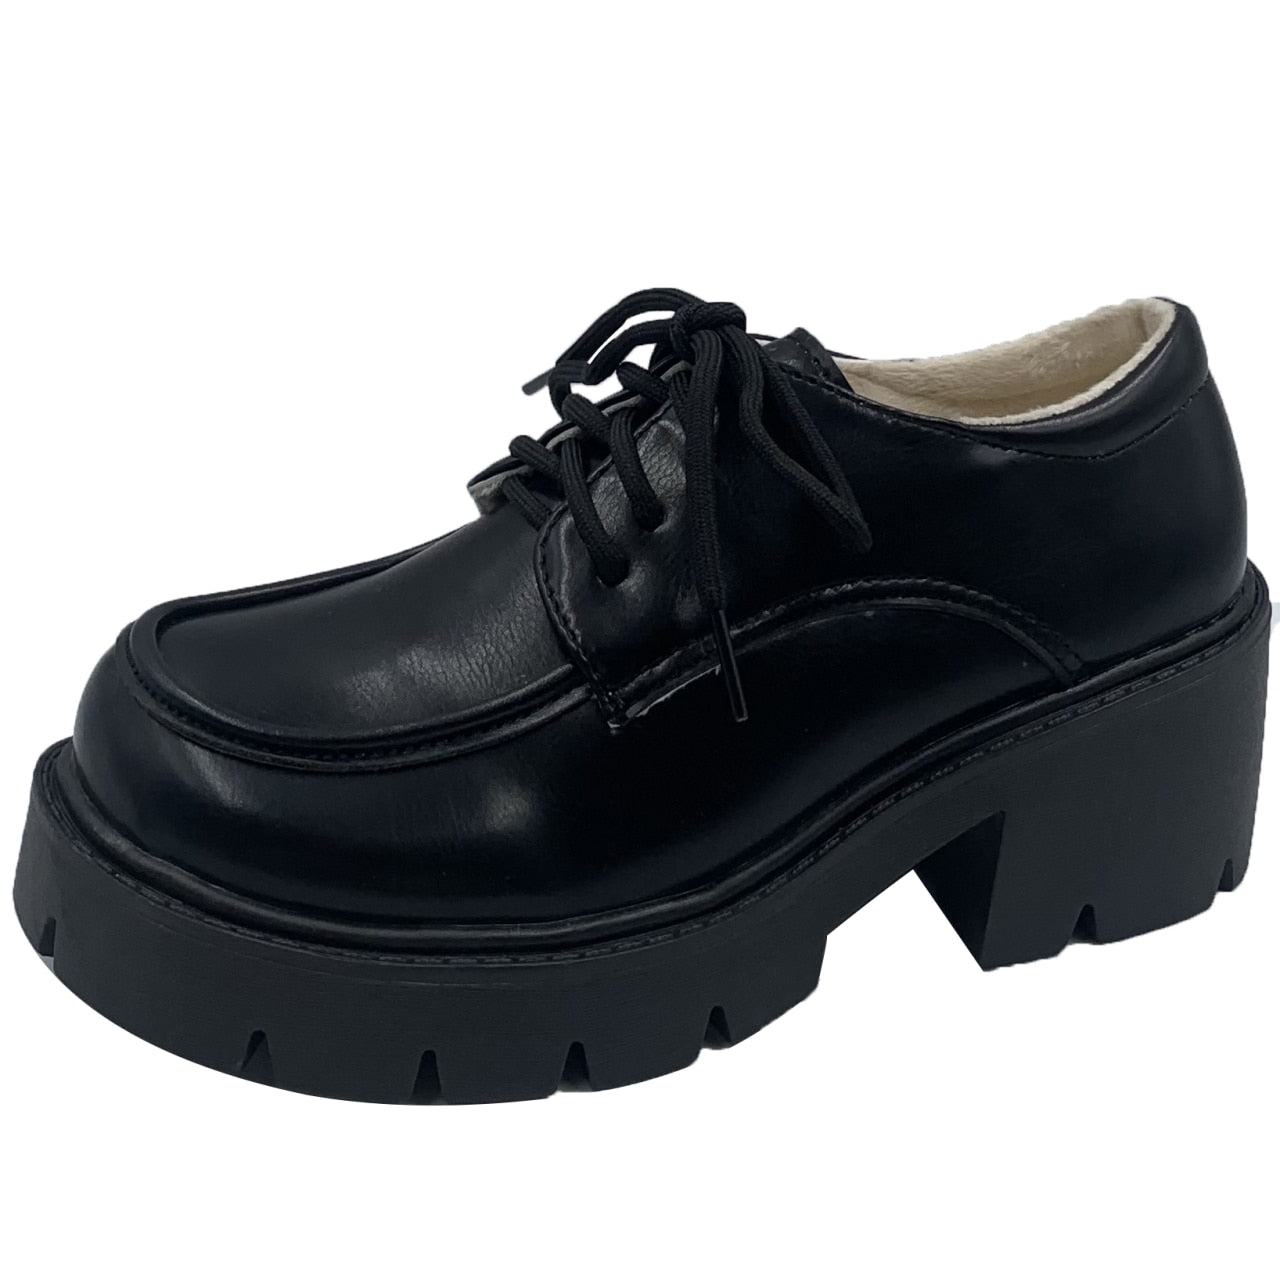 Dark Academia British School Uniform Shoes